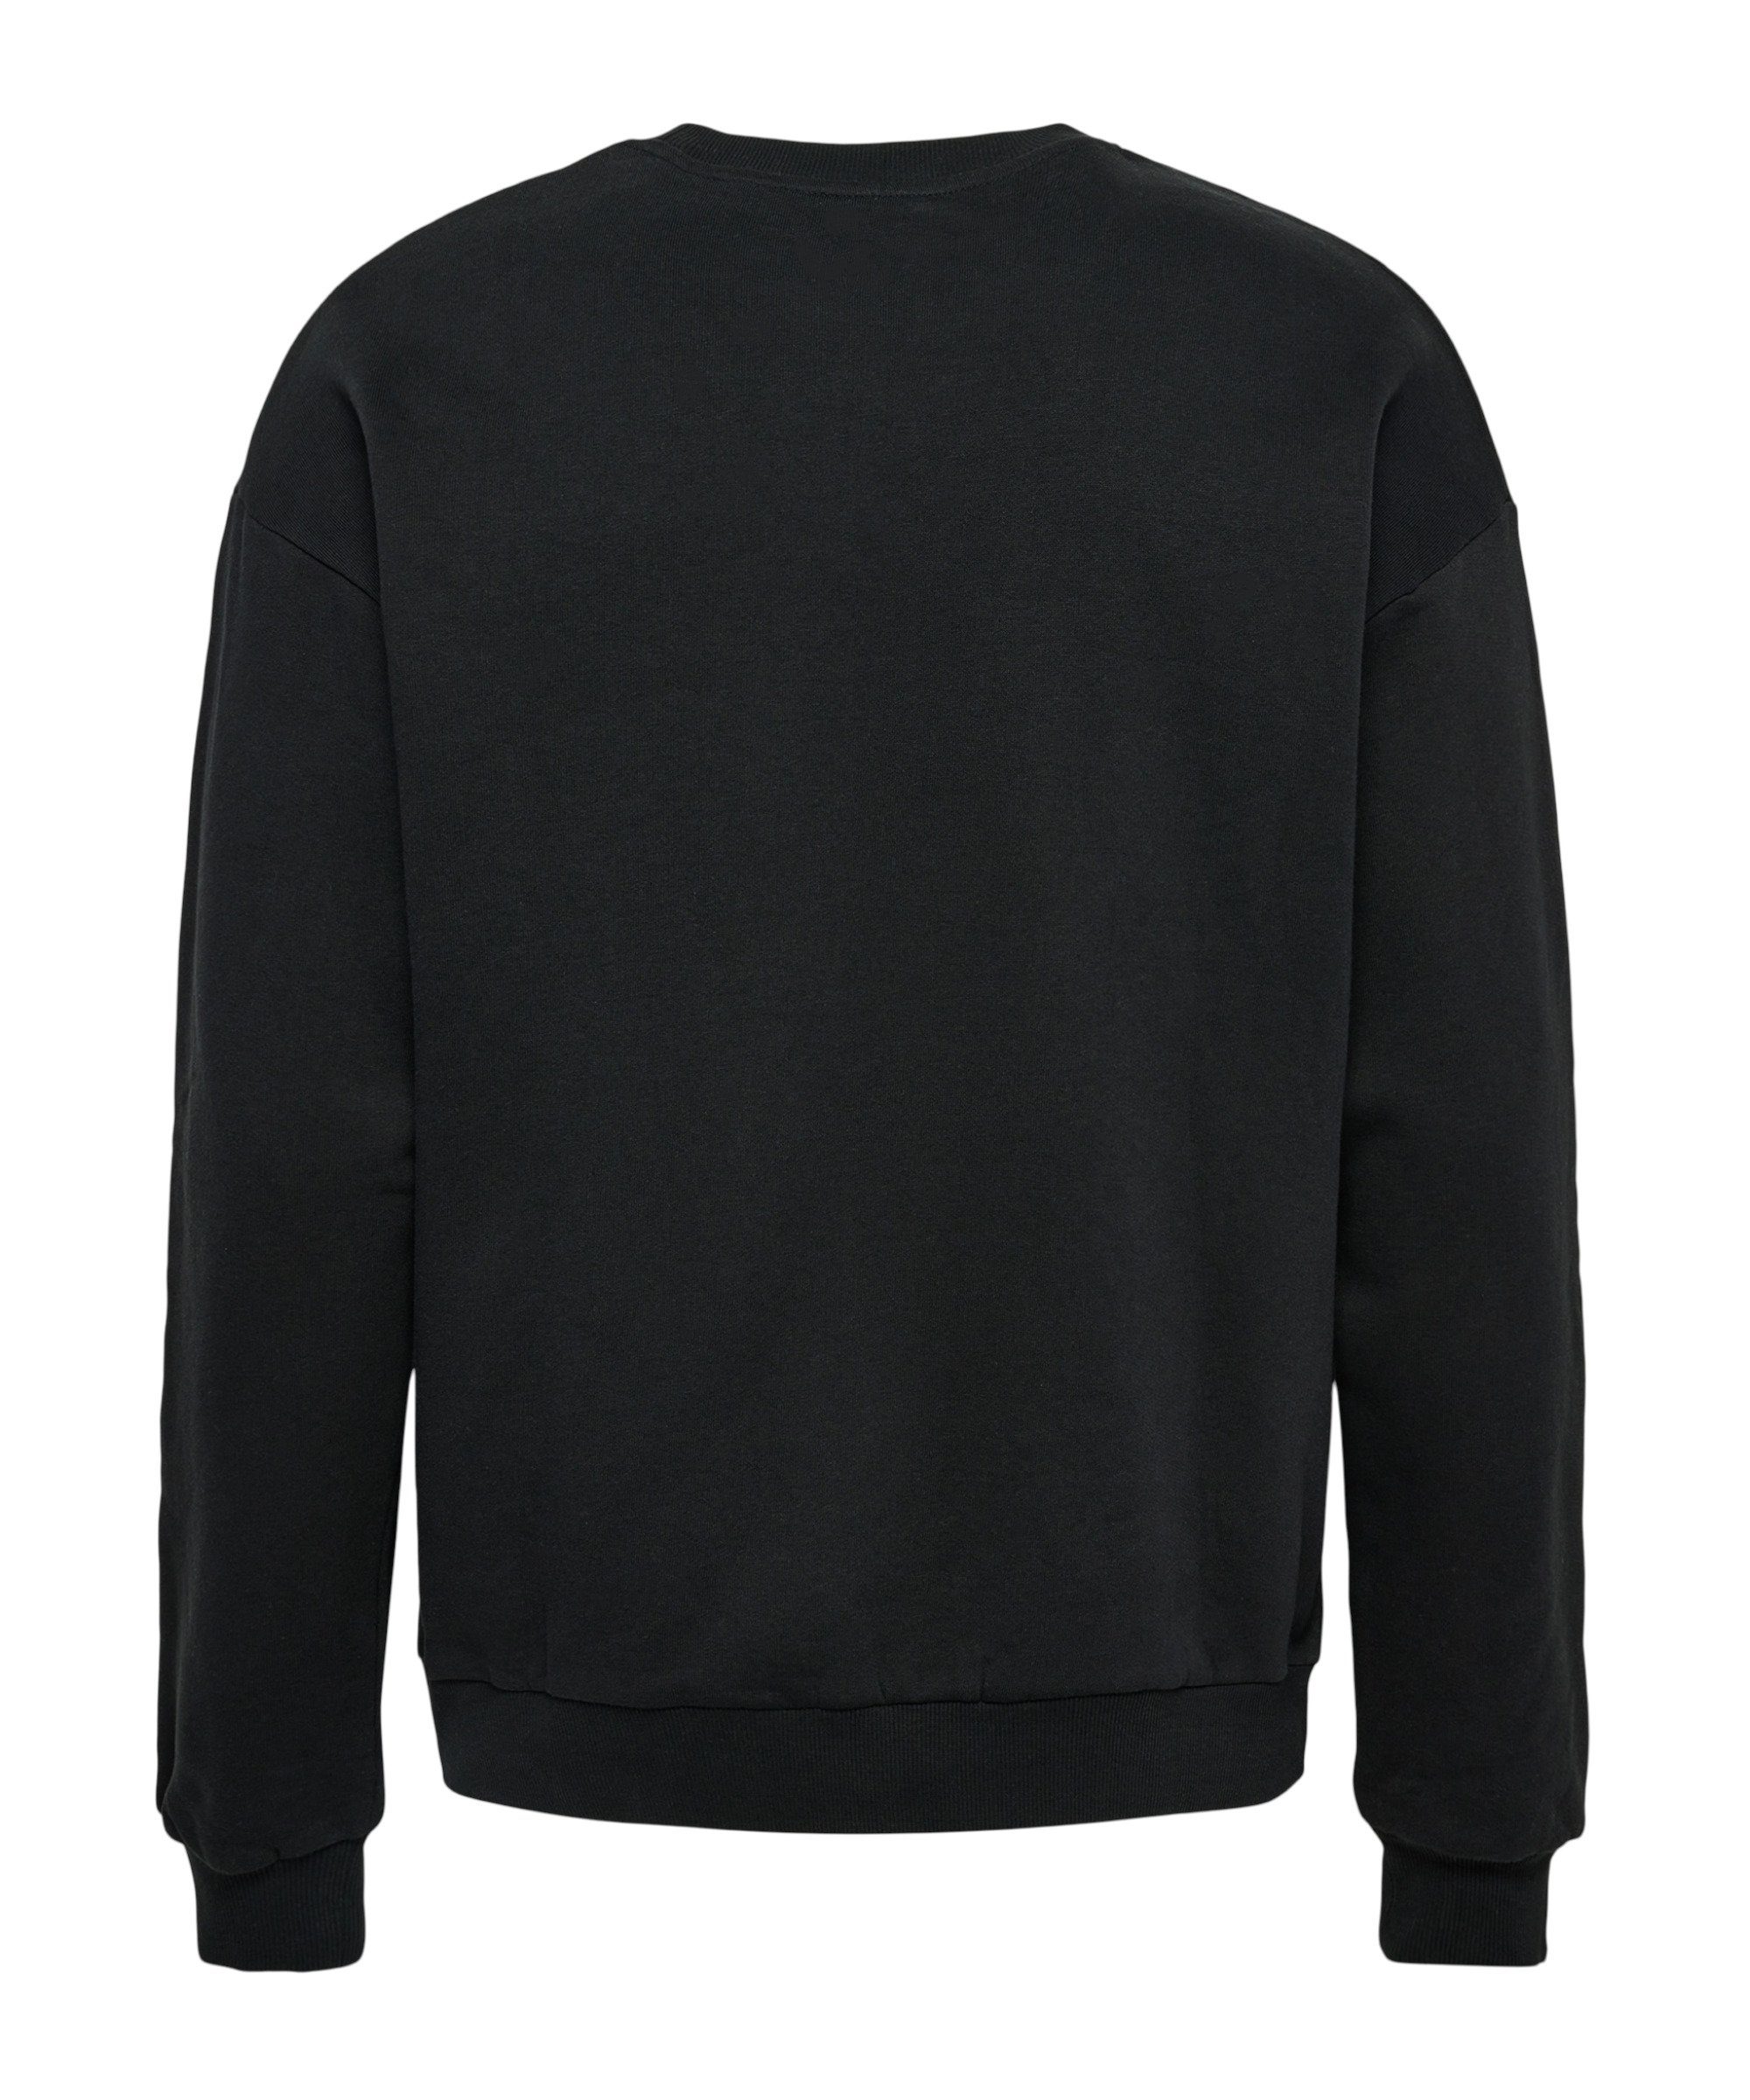 Sweatshirt hmlLP10 hummel schwarz Sweatshirt Boxy